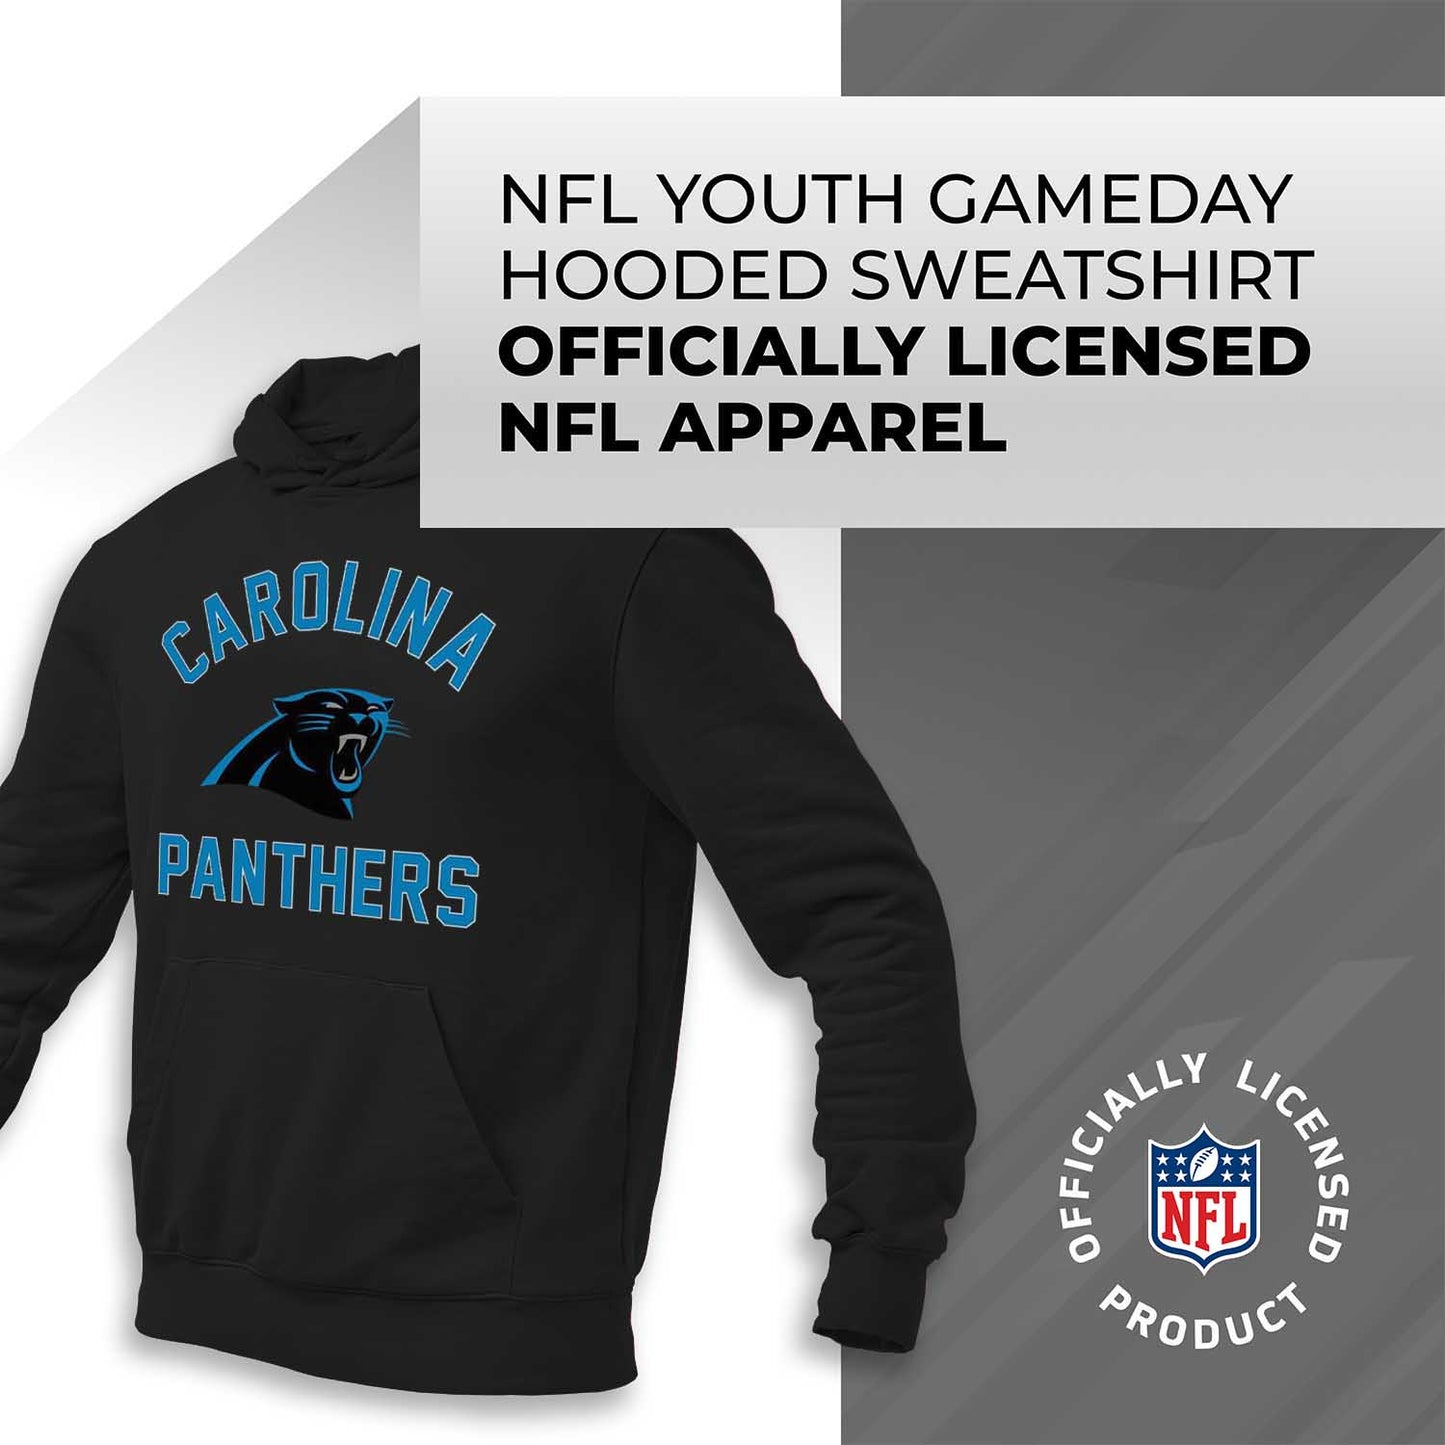 Carolina Panthers NFL Youth Gameday Hooded Sweatshirt - Black